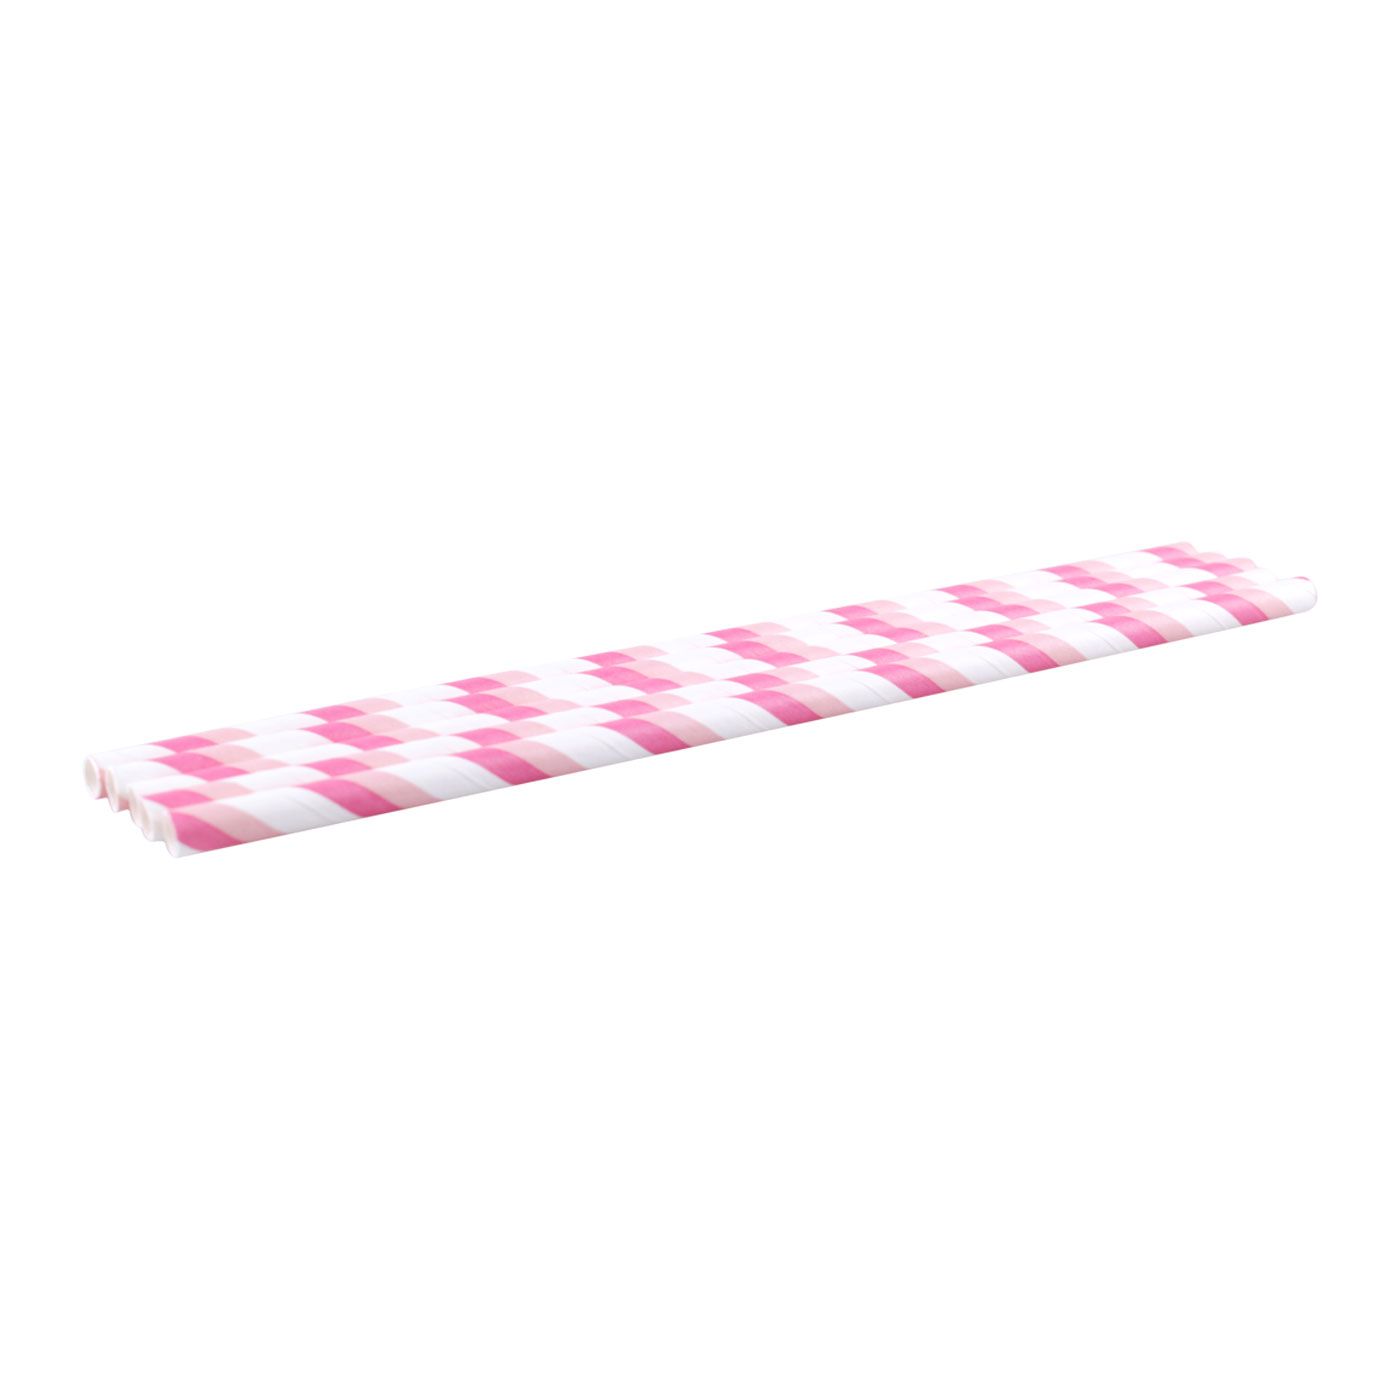 Gudily Pink Squared Straw - 4